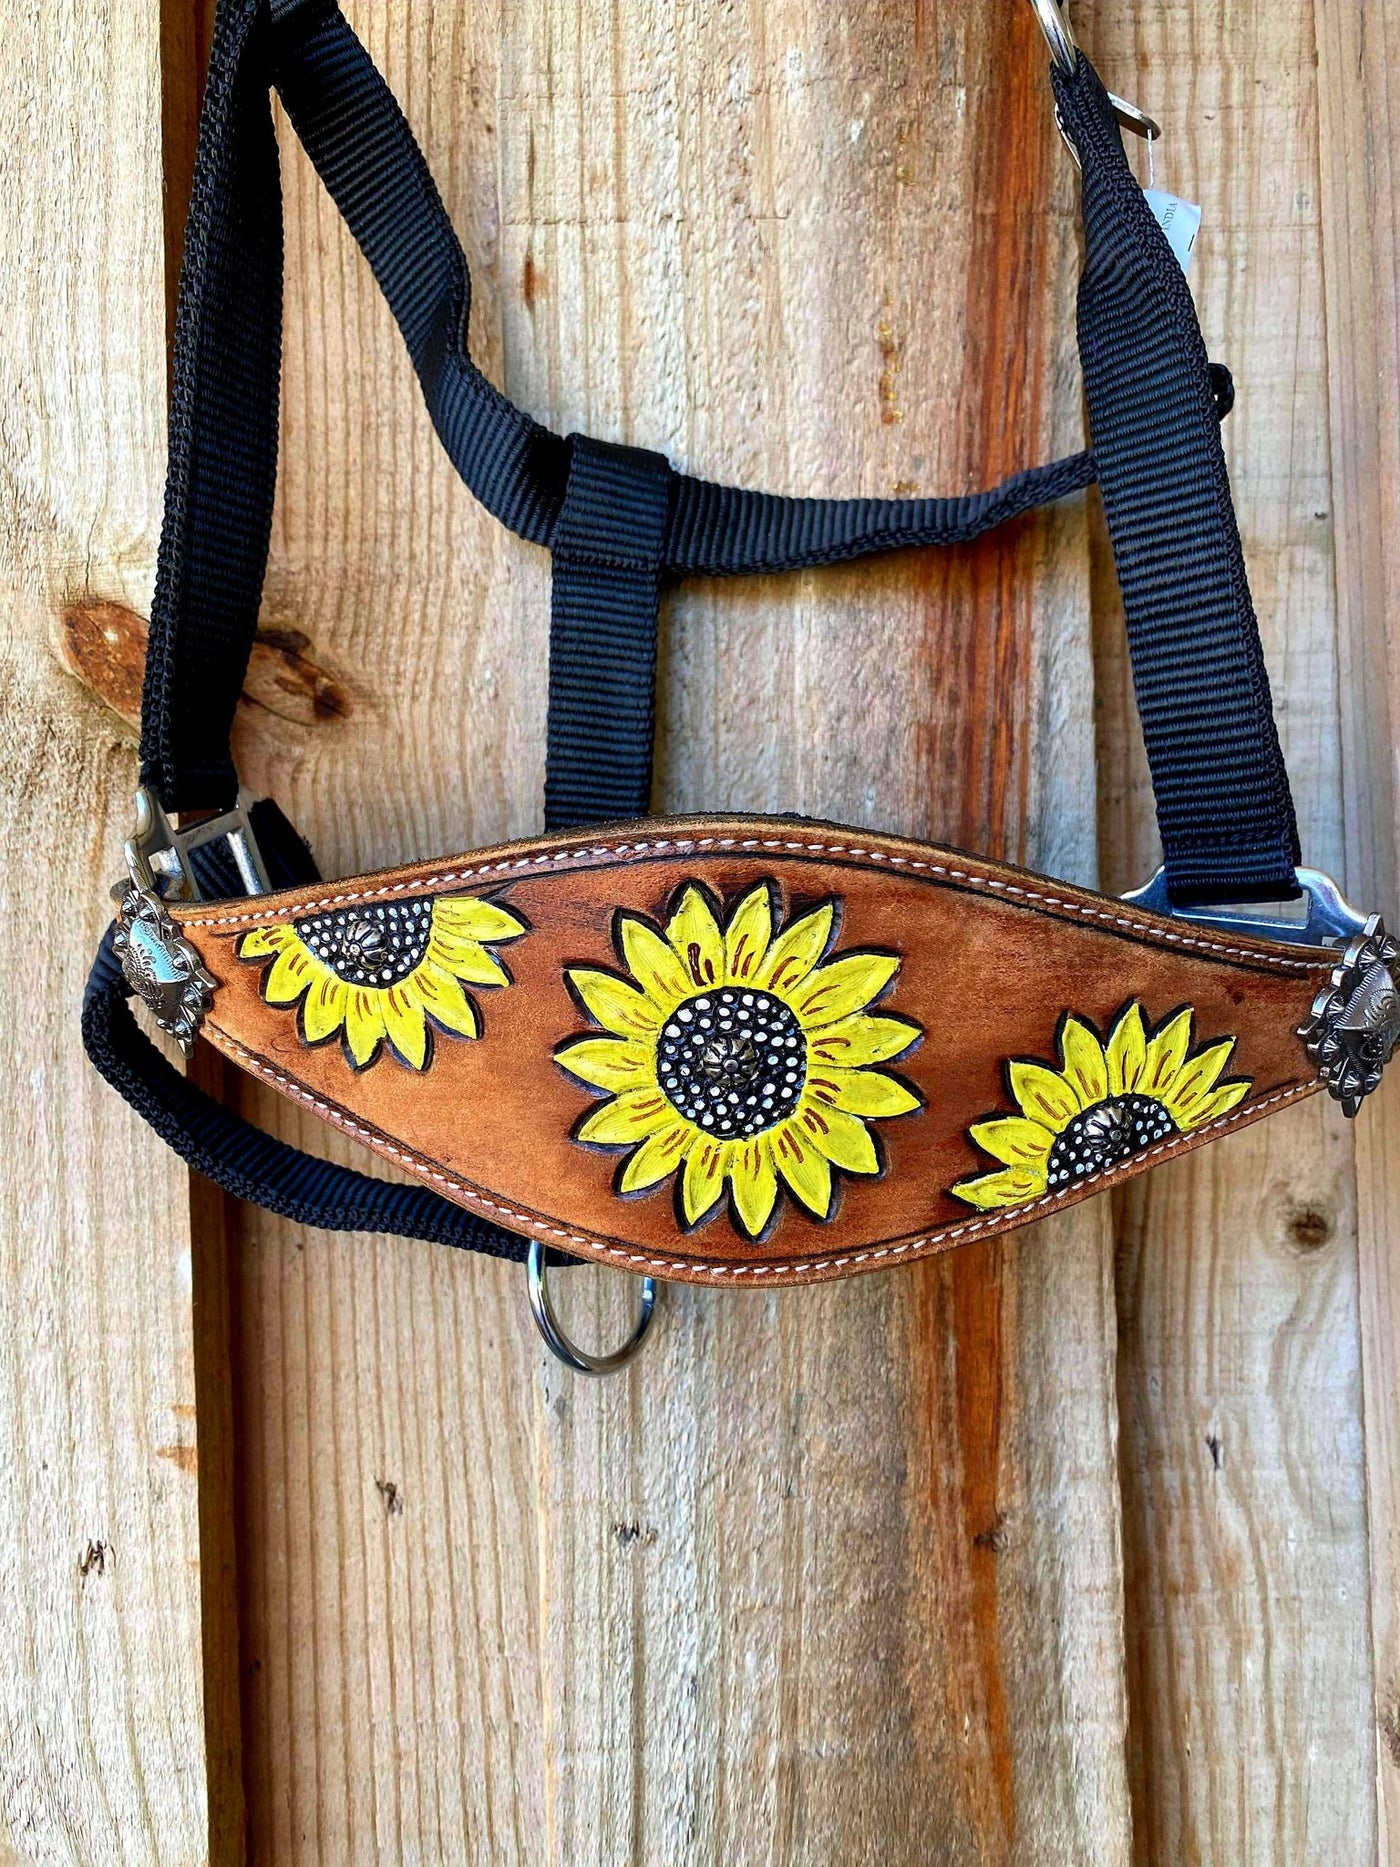 Halter Bronc - Adjustable nylon bronc halter with sunflower hand painted nose band